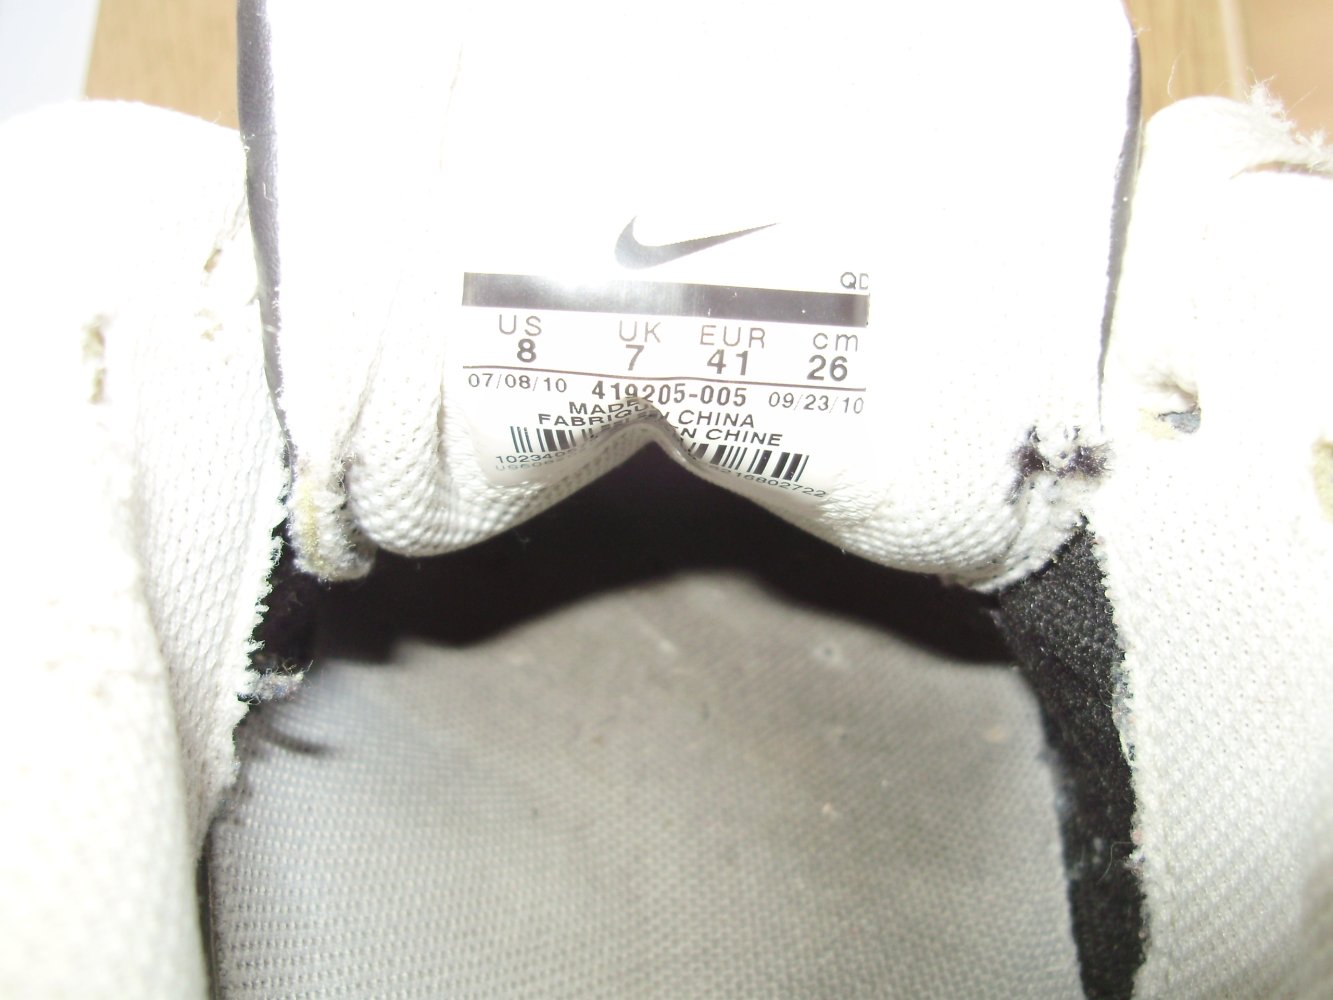 Nike Sneaker Sportschuhe schwarz grau weiß rot Gr 41